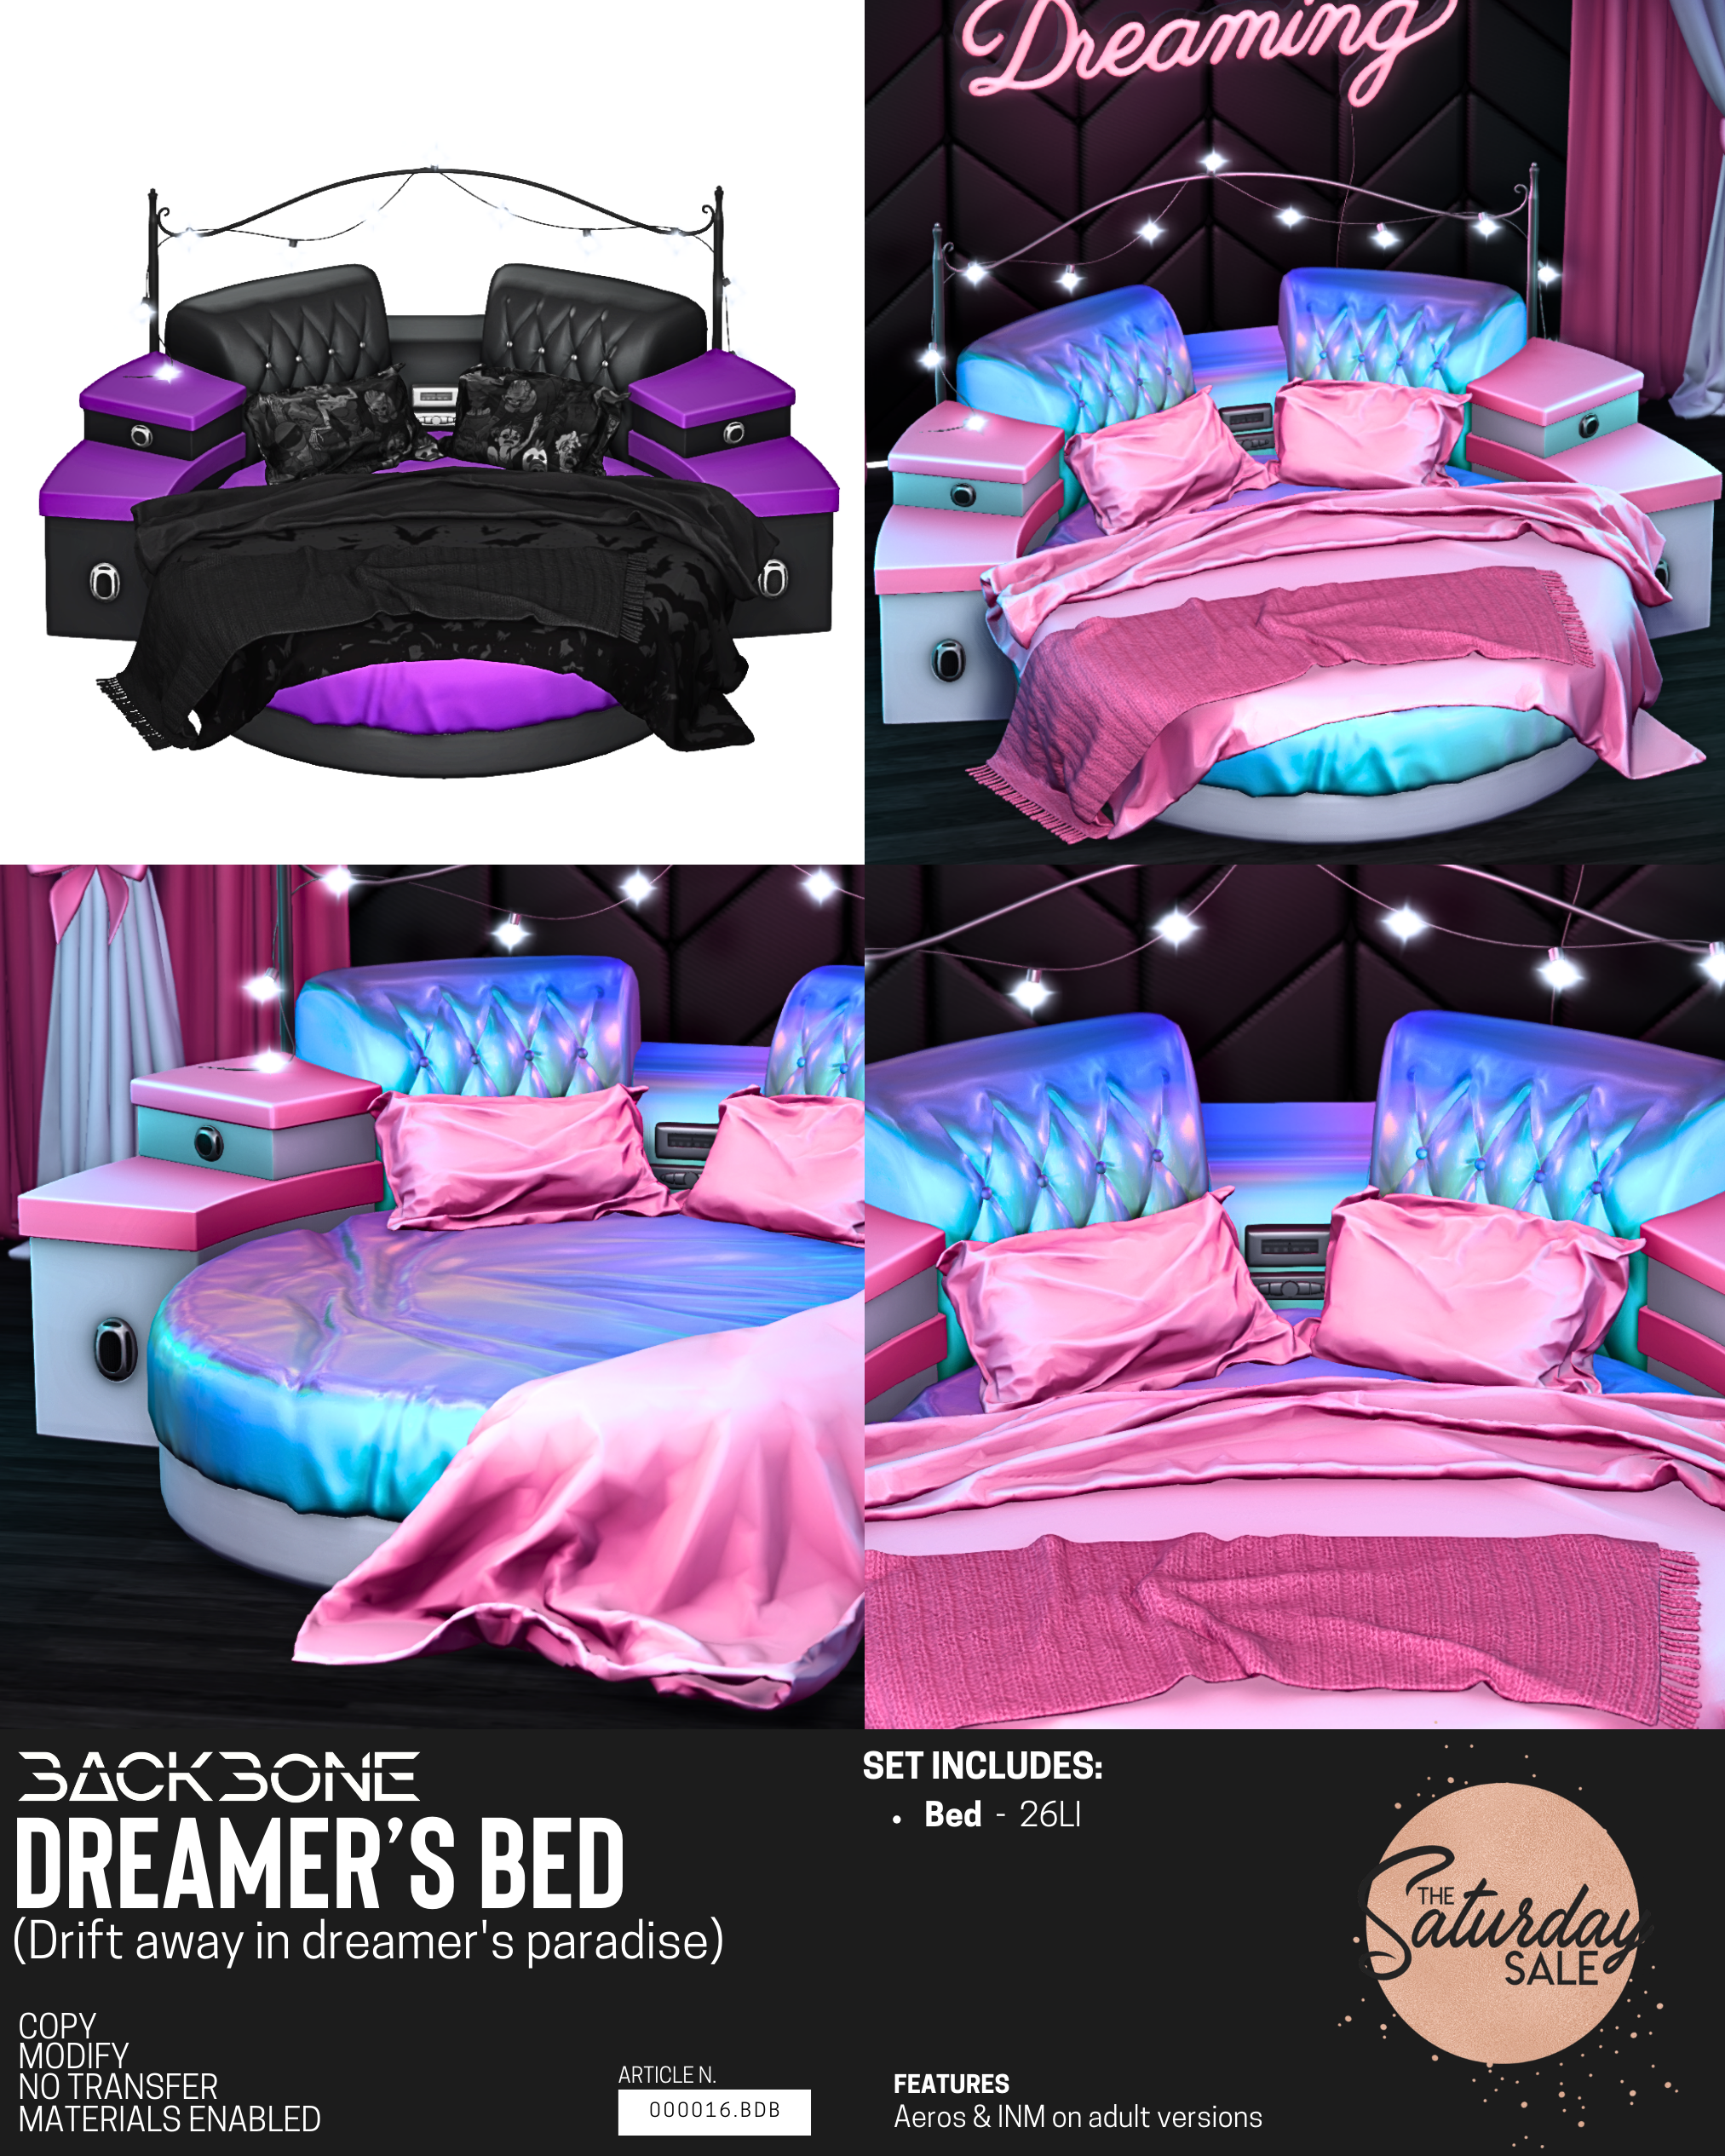 BackBone – Dreamer’s Bed